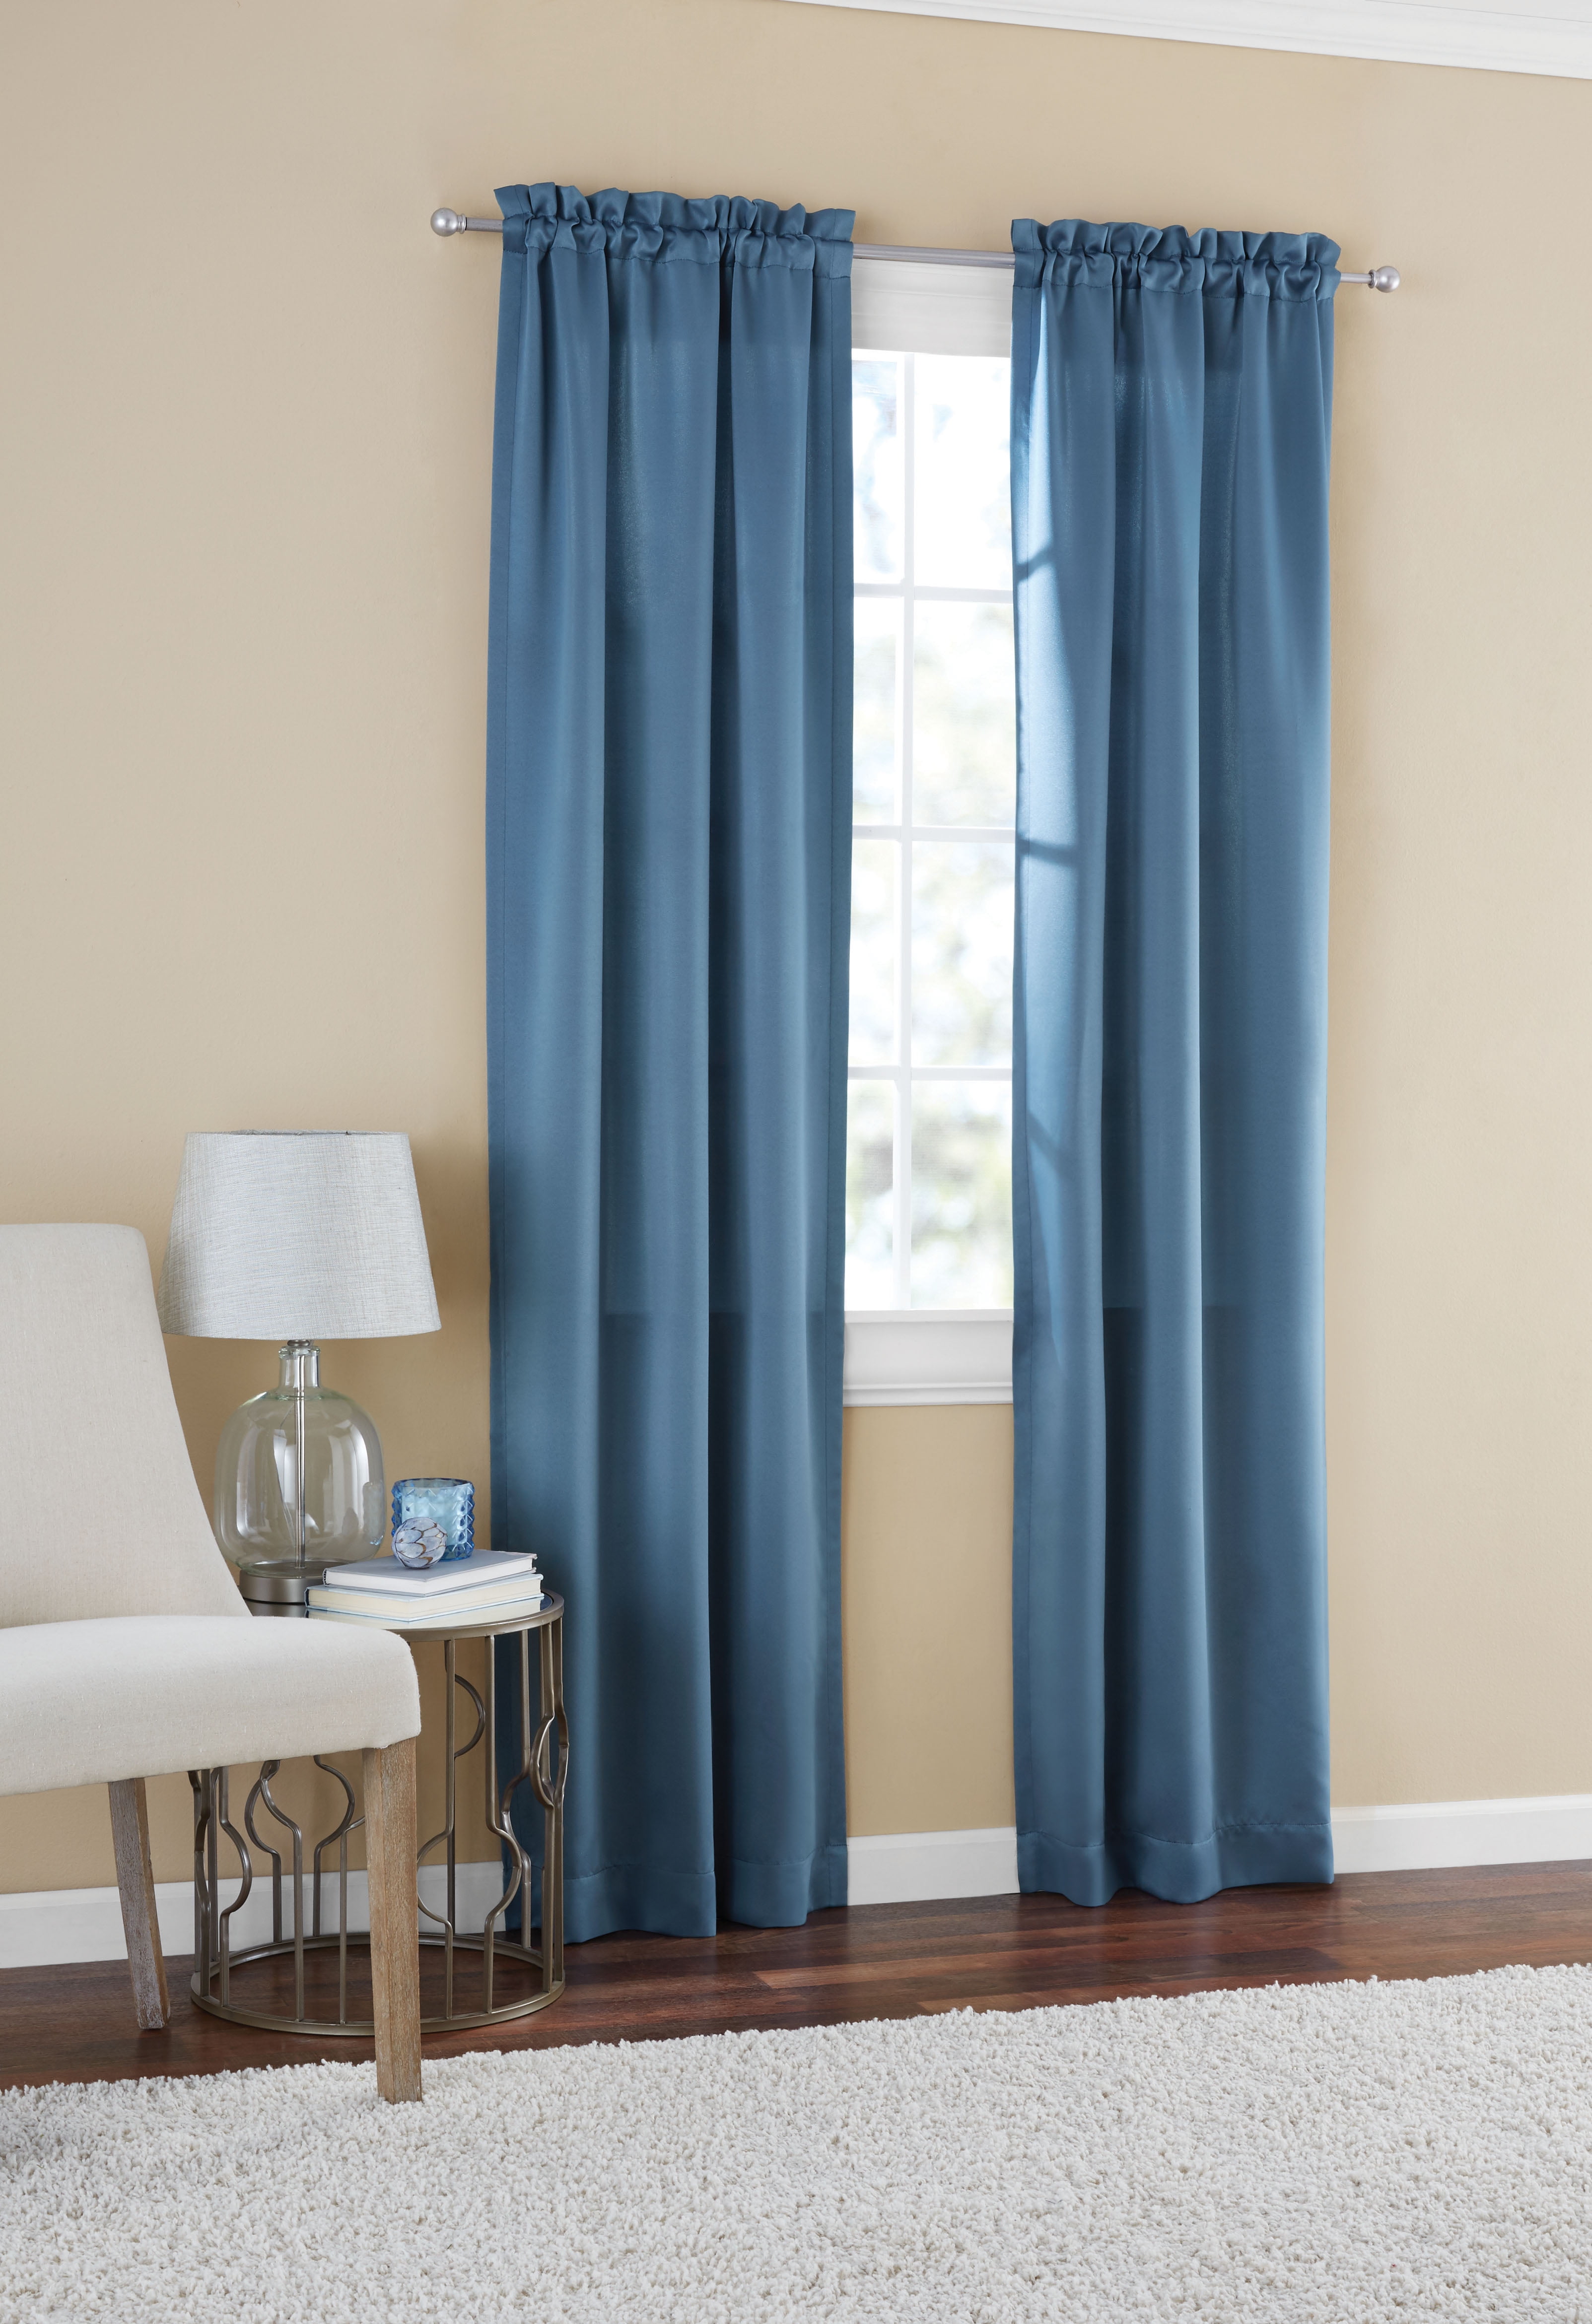 Mainstays Solid Color Room Darkening Rod Pocket Curtain Panel Pair, Set of 2, Blue, 30 x 84